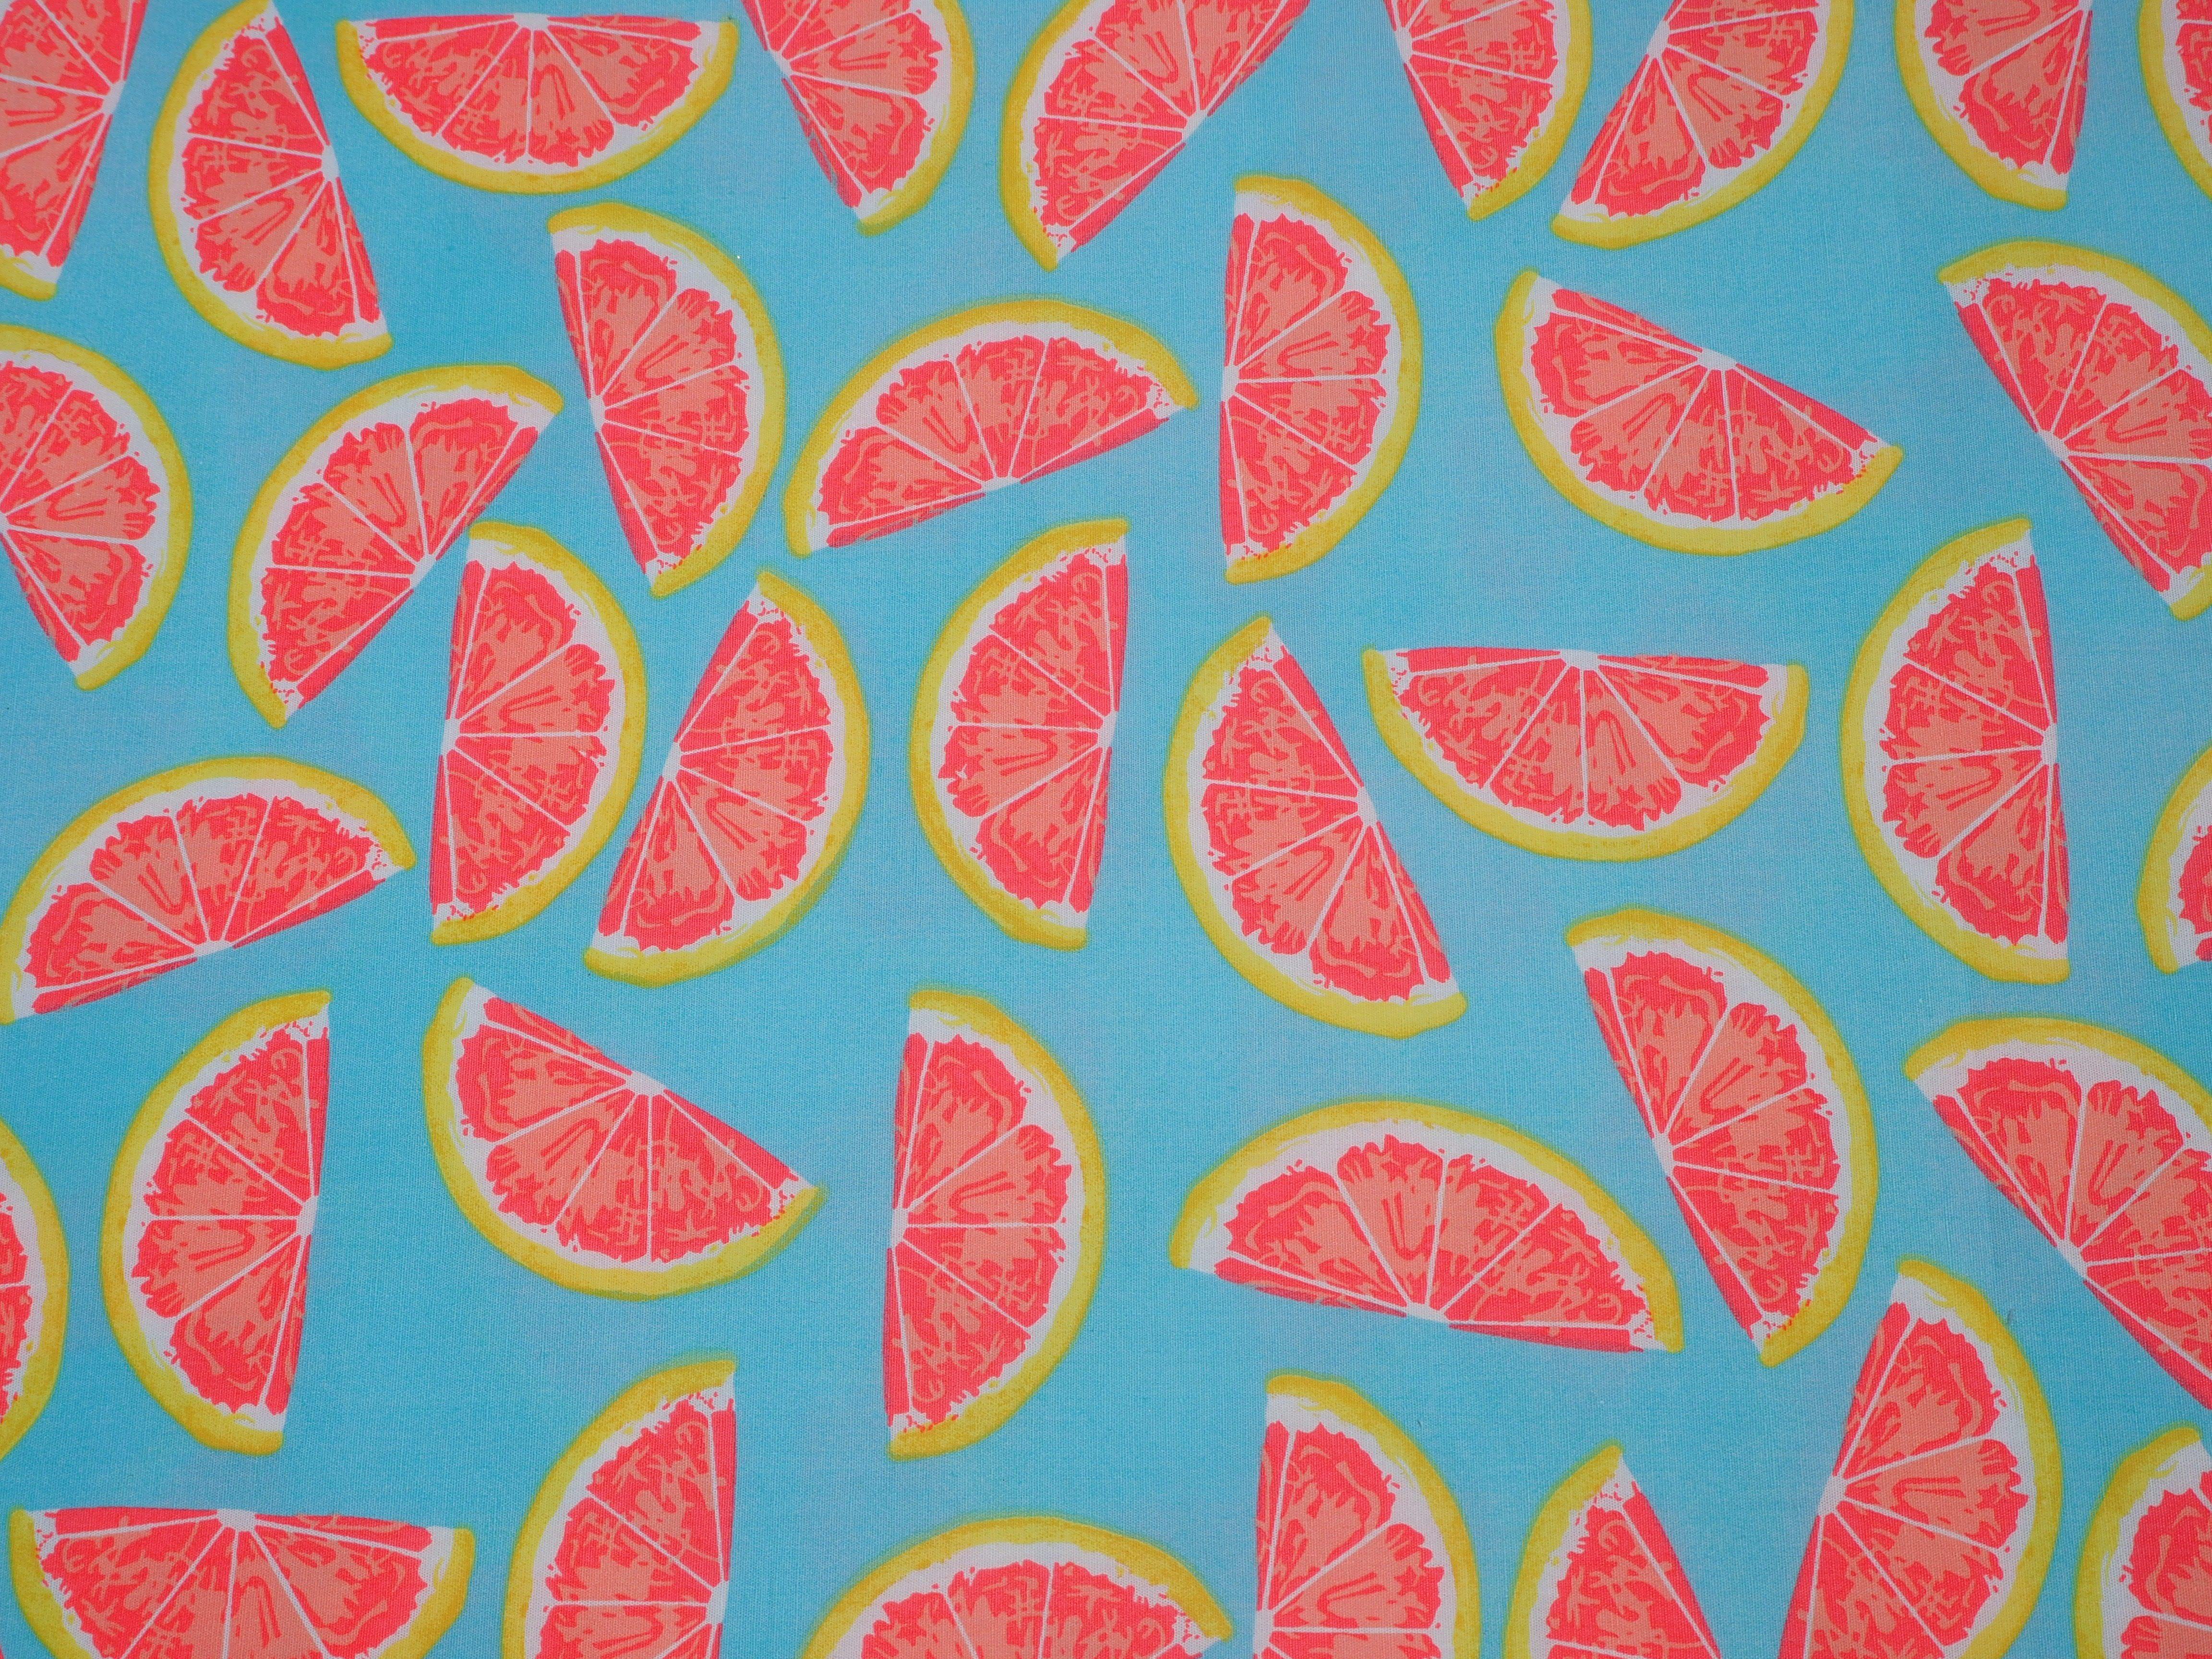 Slices of Citrus Fruit on Aqua Blue background, 100% cotton fabric